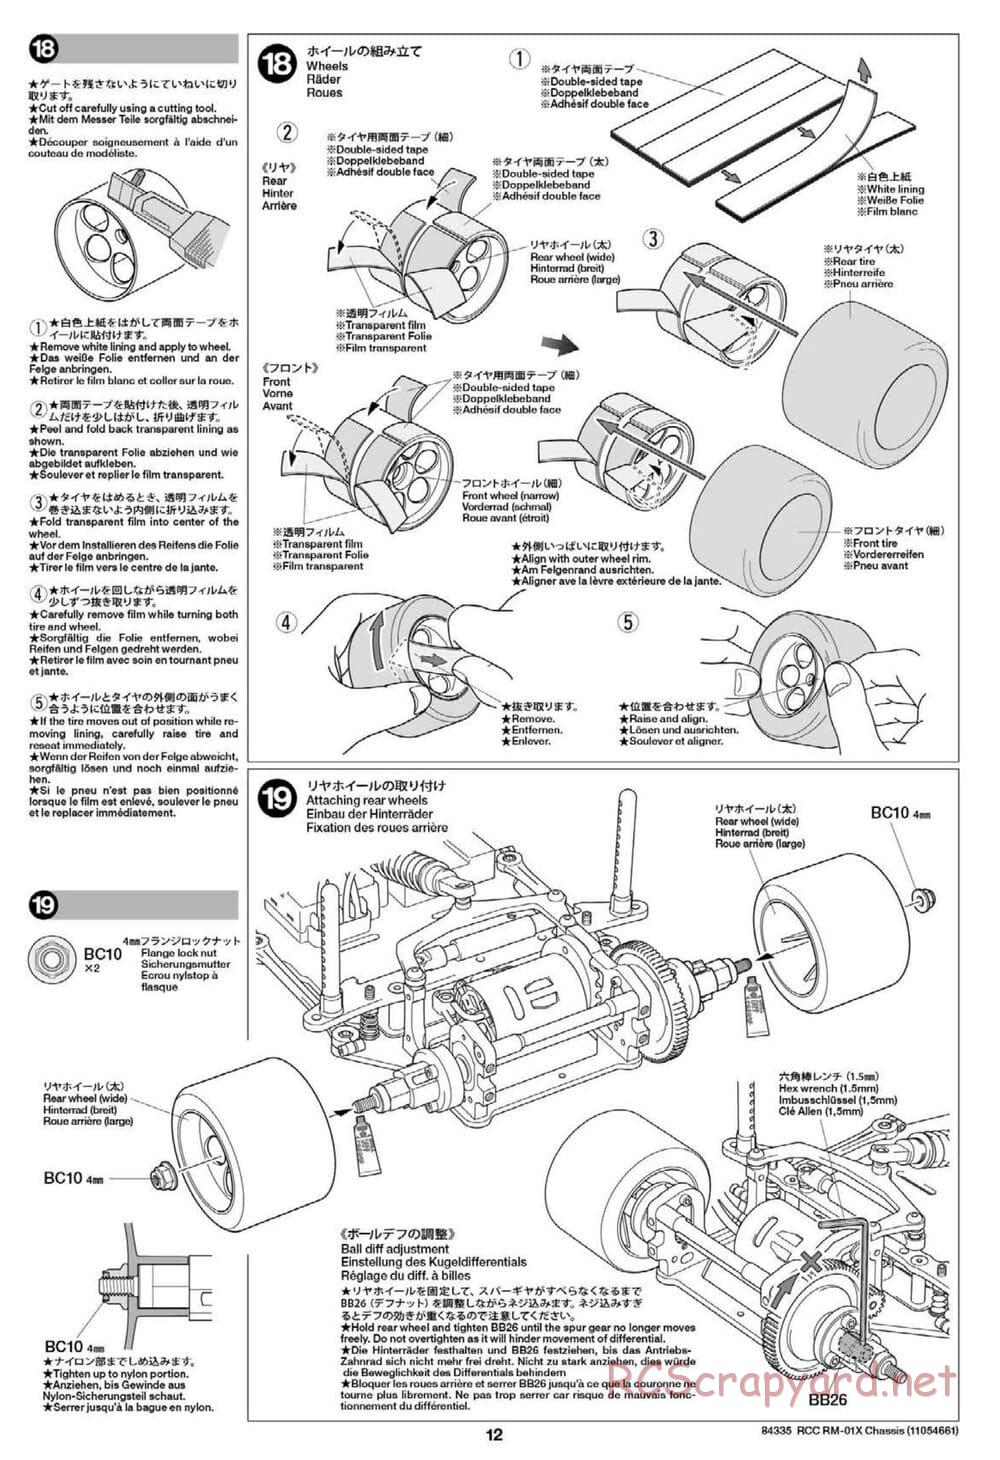 Tamiya - RM-01X Chassis - Manual - Page 12